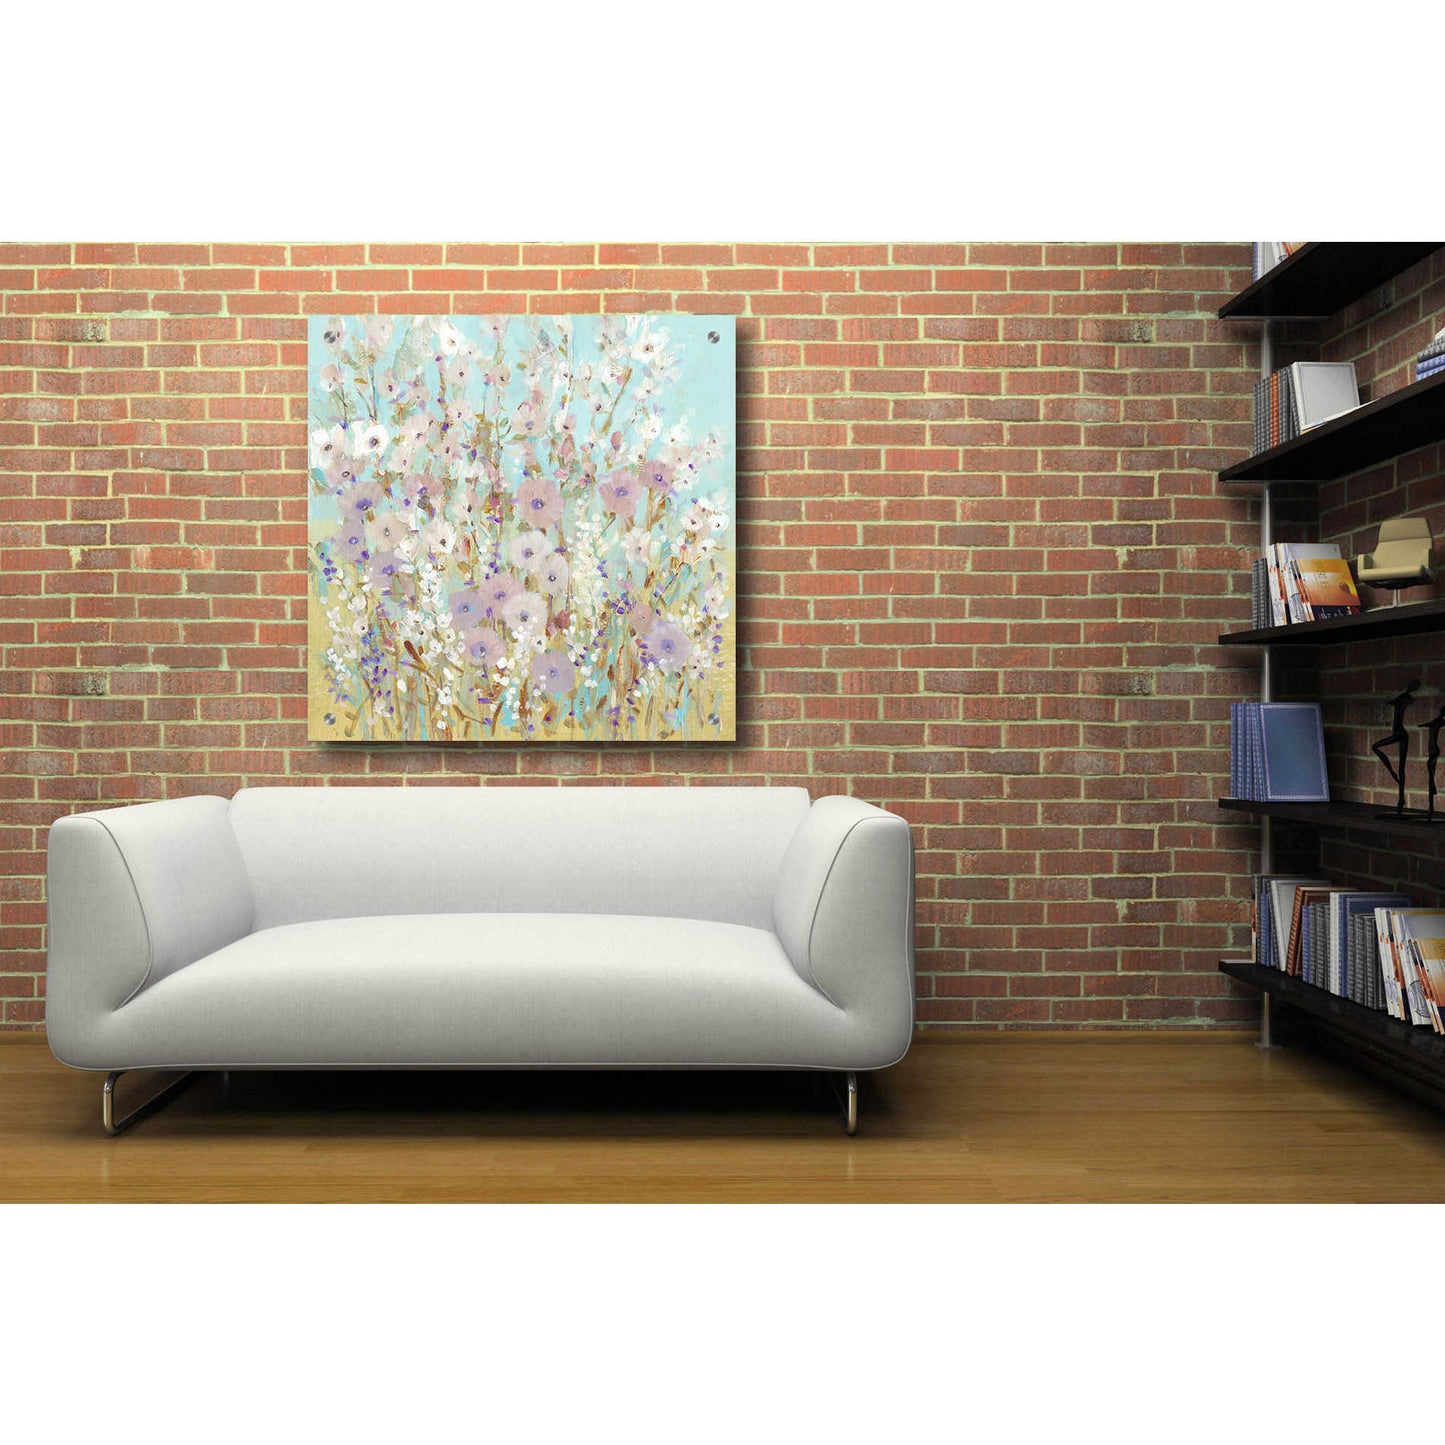 Epic Art 'Mixed Flowers I' by Tim O'Toole, Acrylic Glass Wall Art,36x36